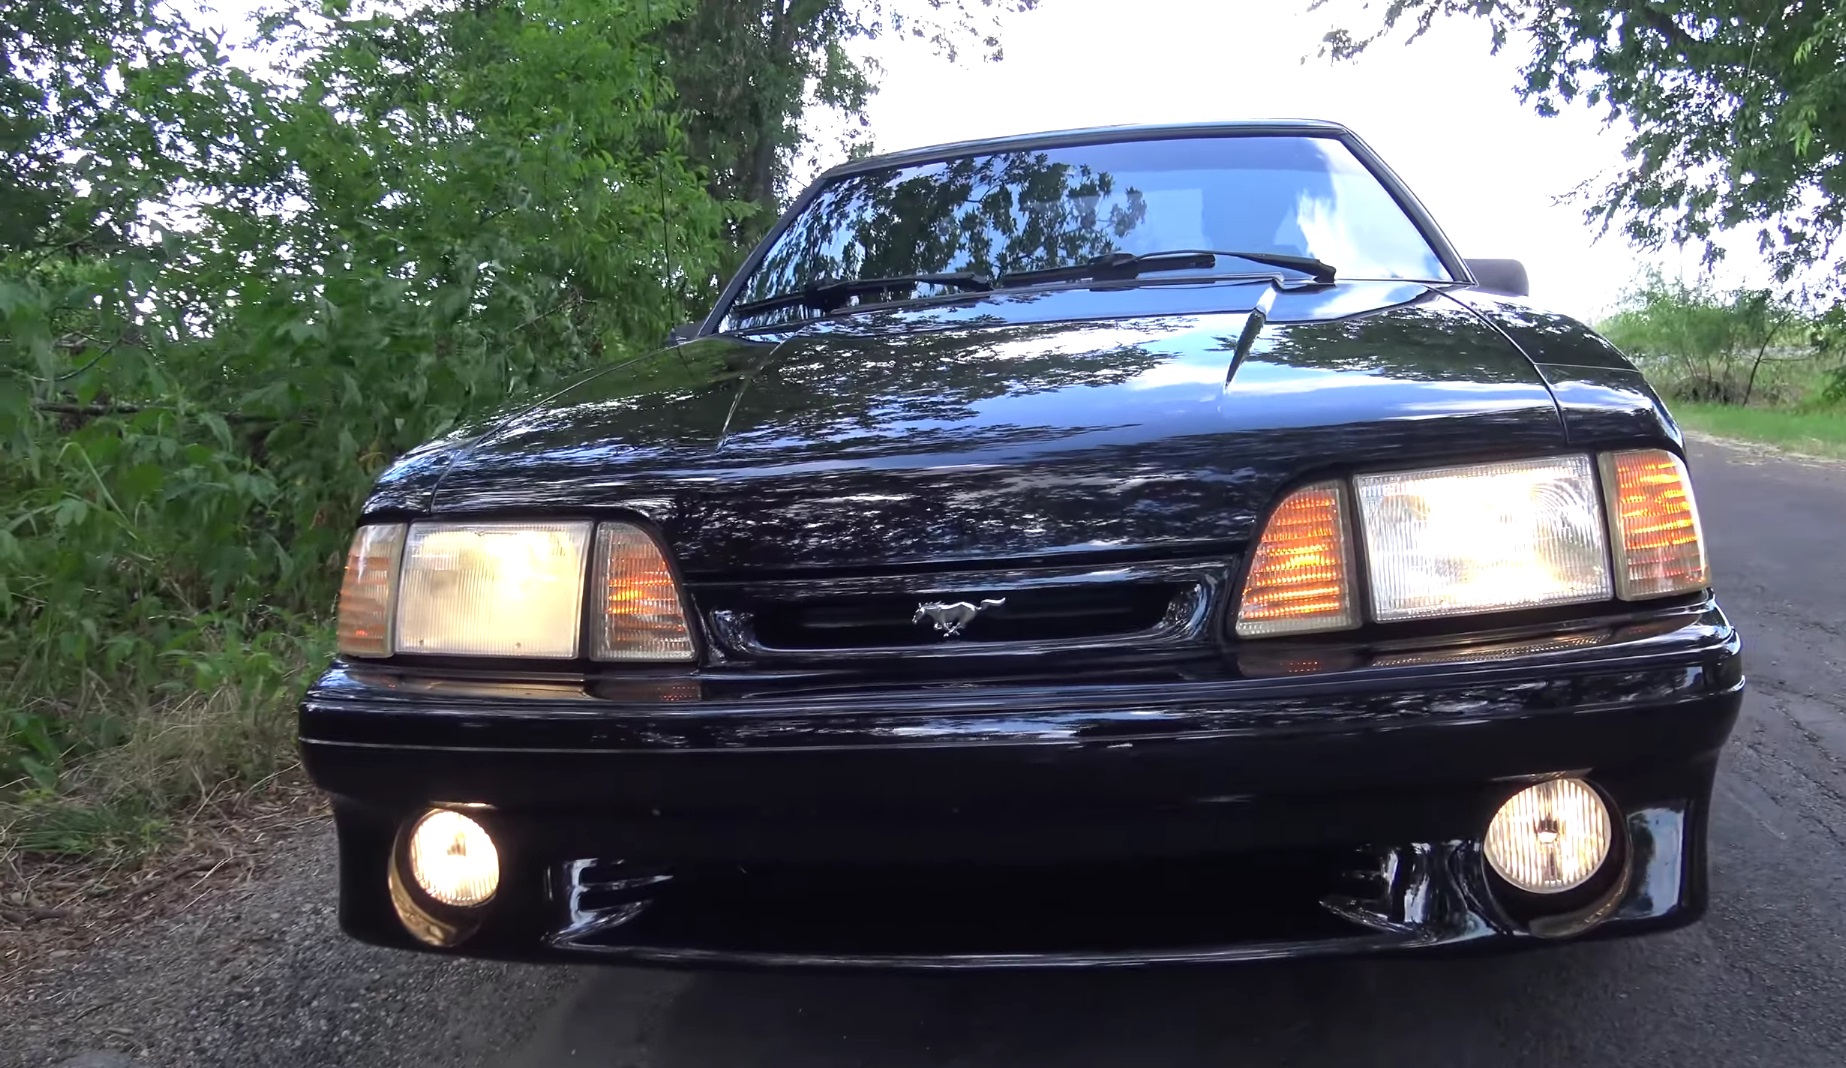 Video: 1993 Ford Mustang SVT Cobra Walkaround + Engine Revs